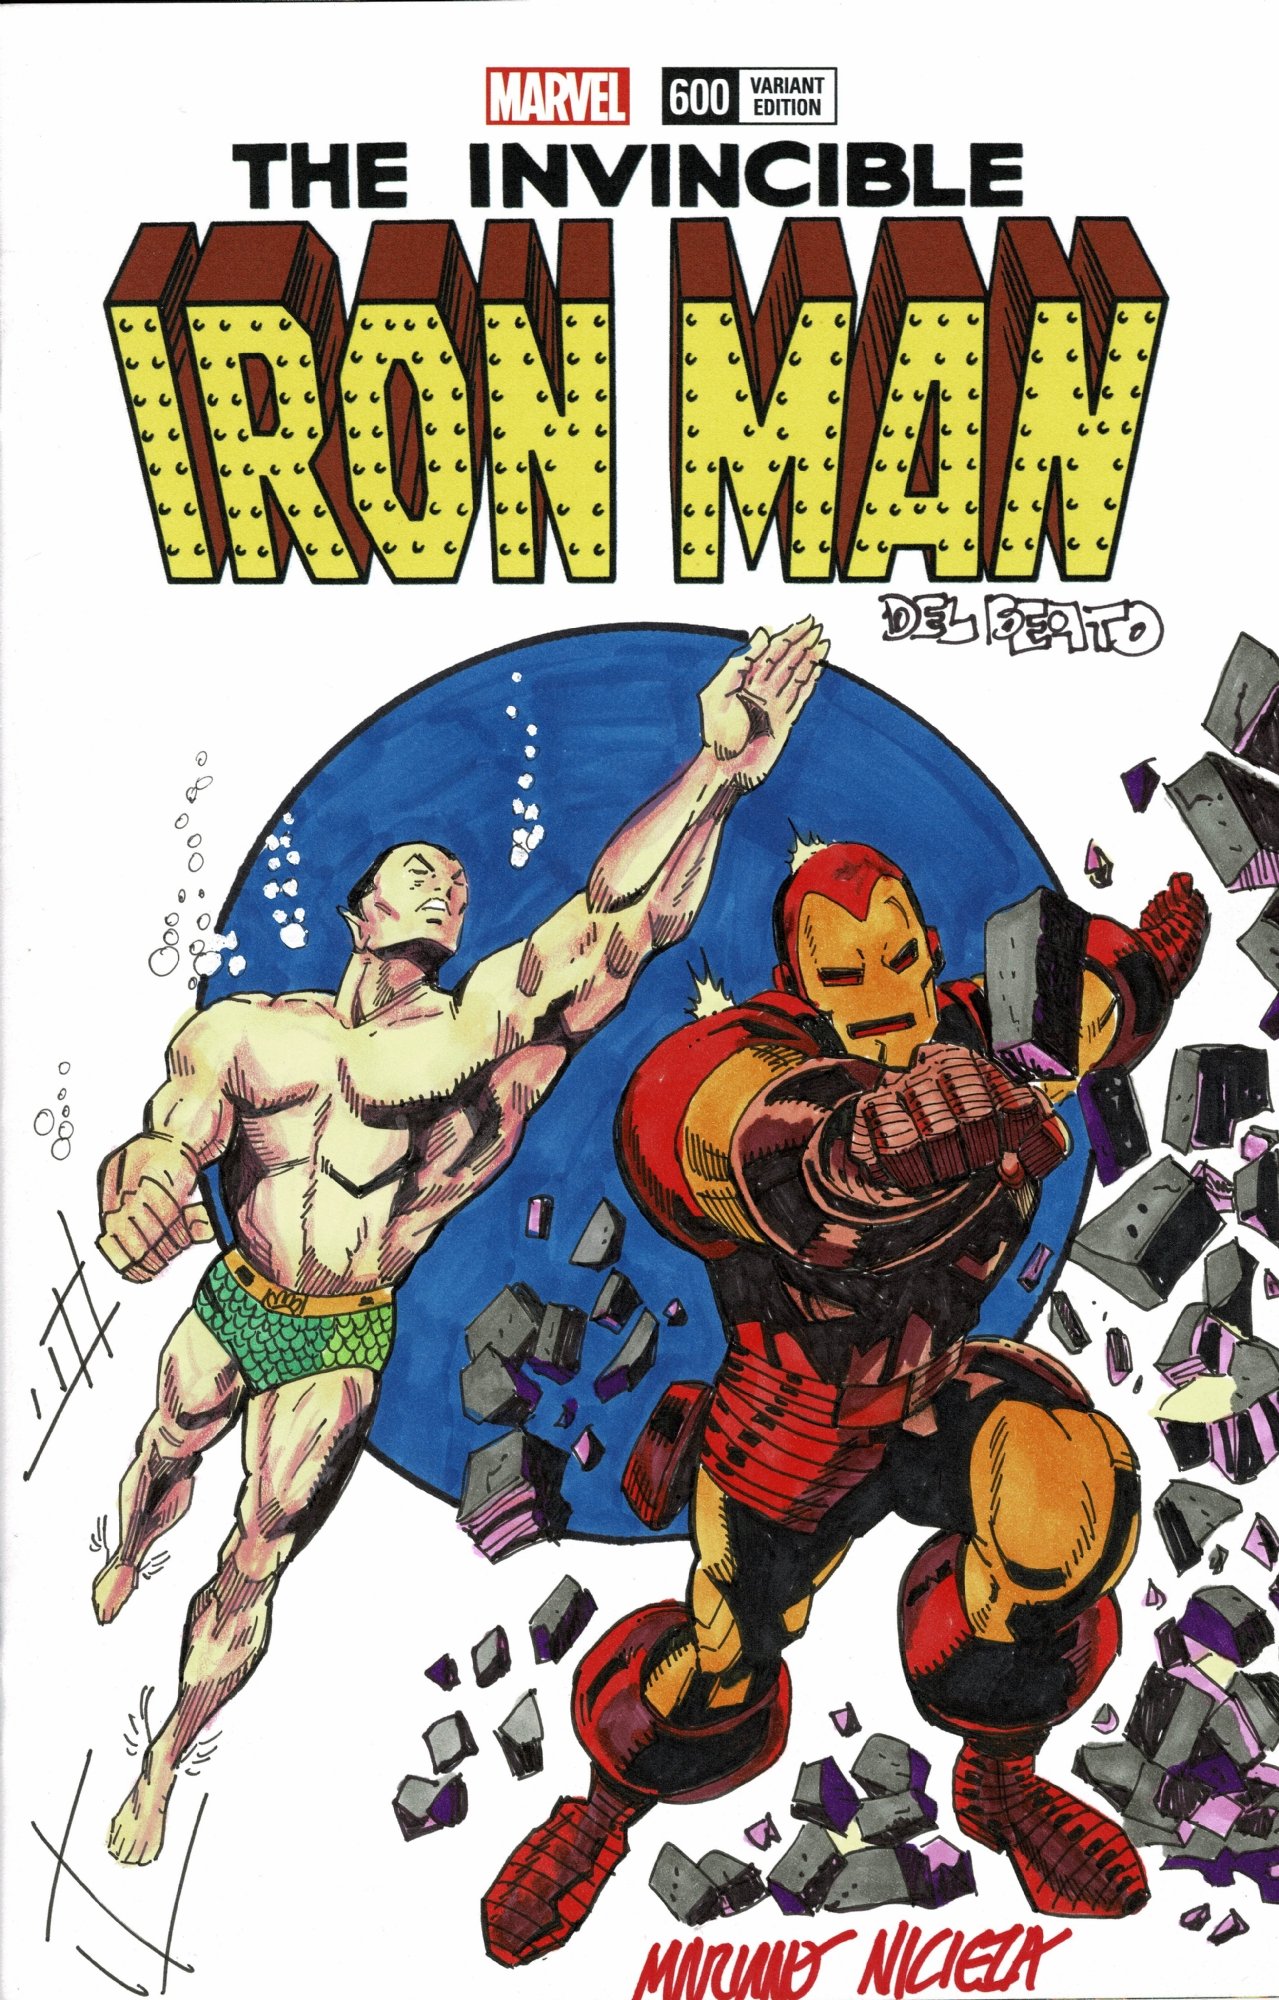 Invincible Iron Man #11 - Discount Comic Book Service